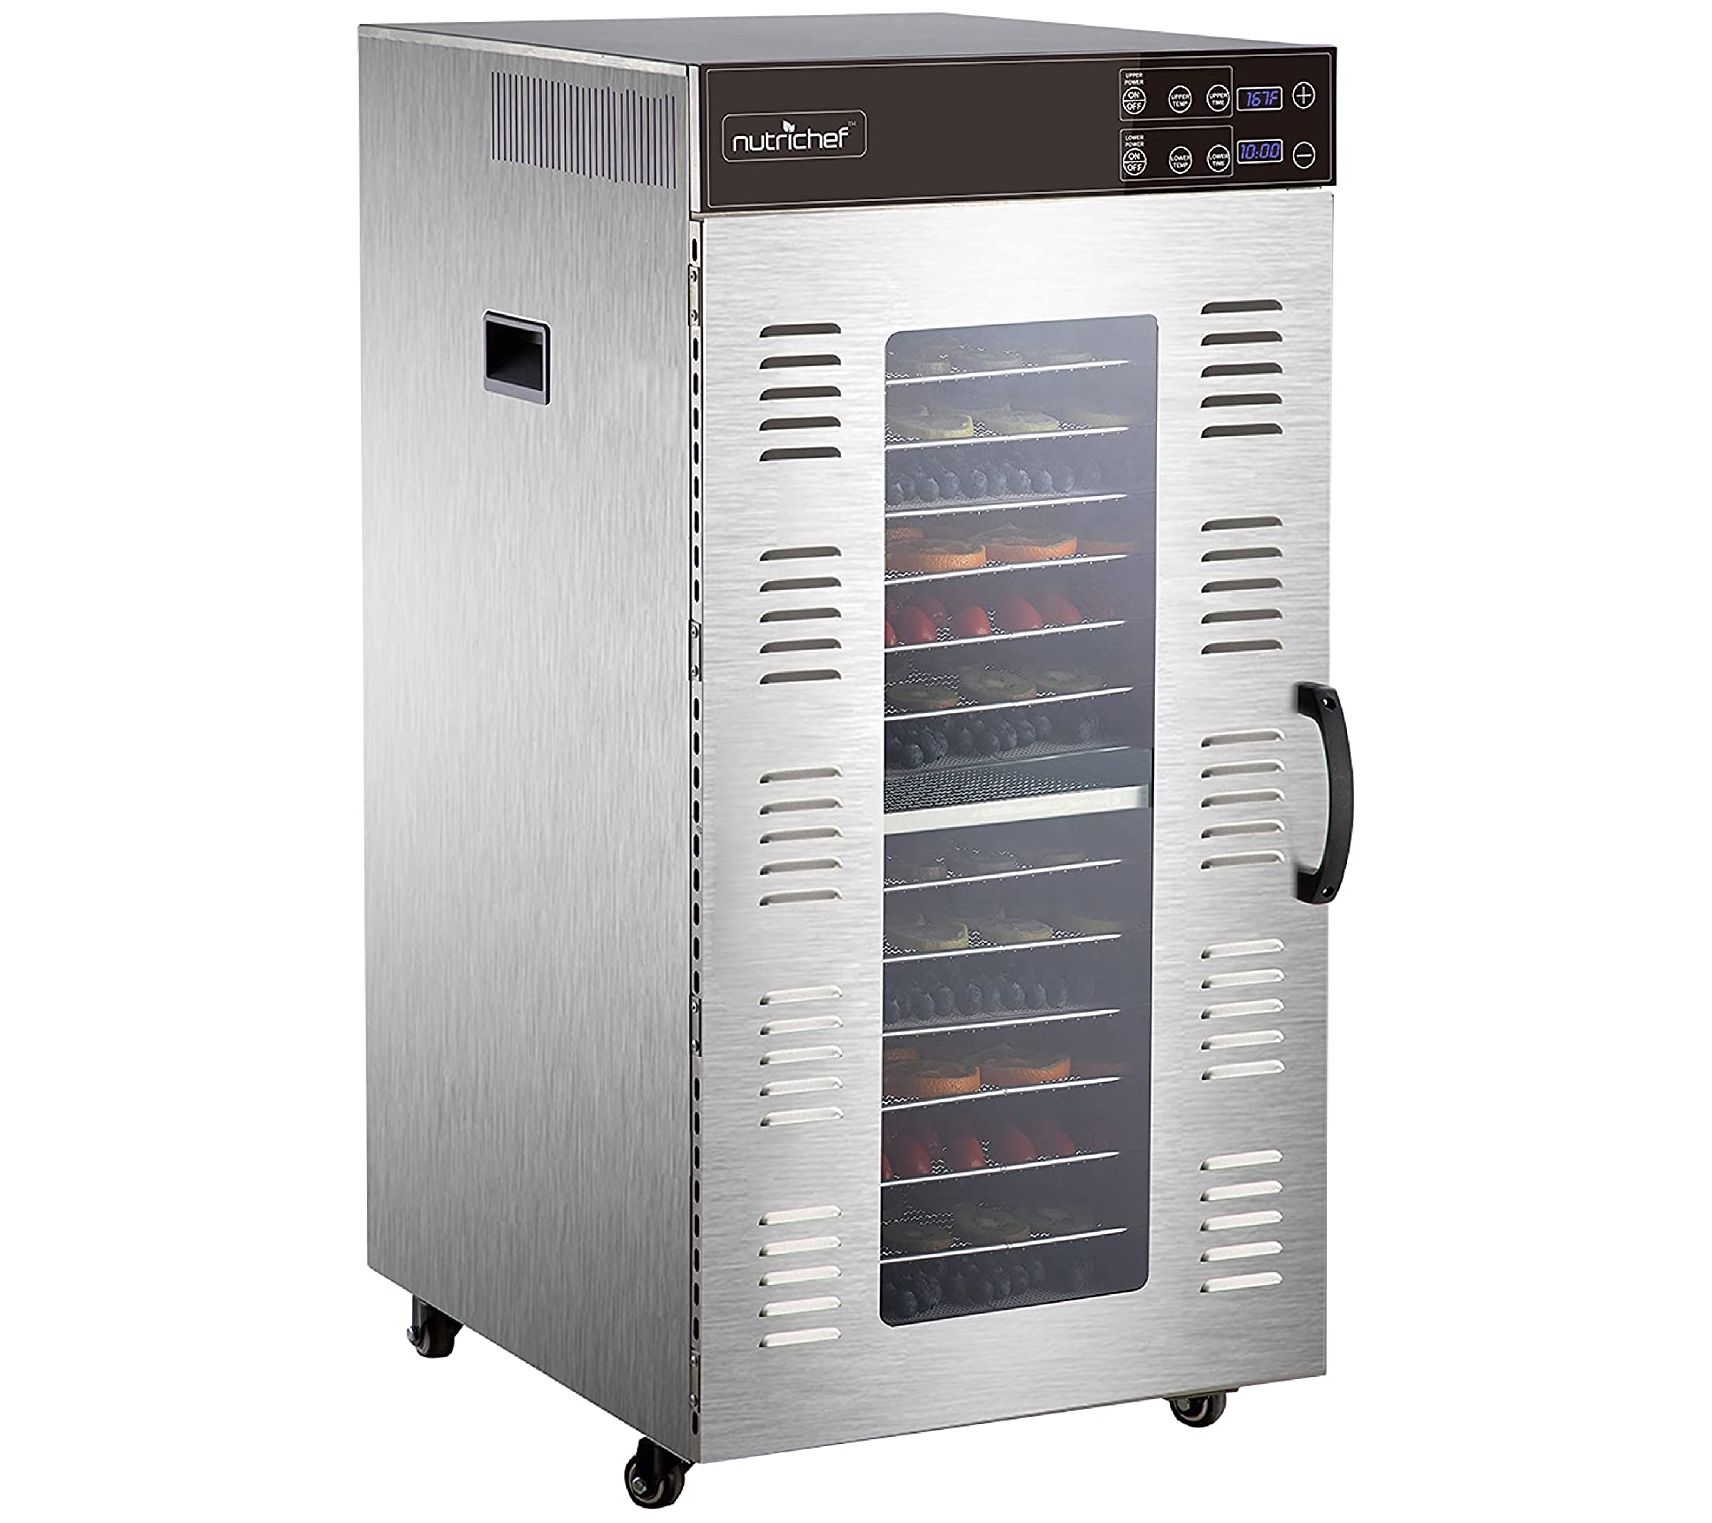 Ivation 9 Tray Premium Digital Electric Food Dehydrator Machine